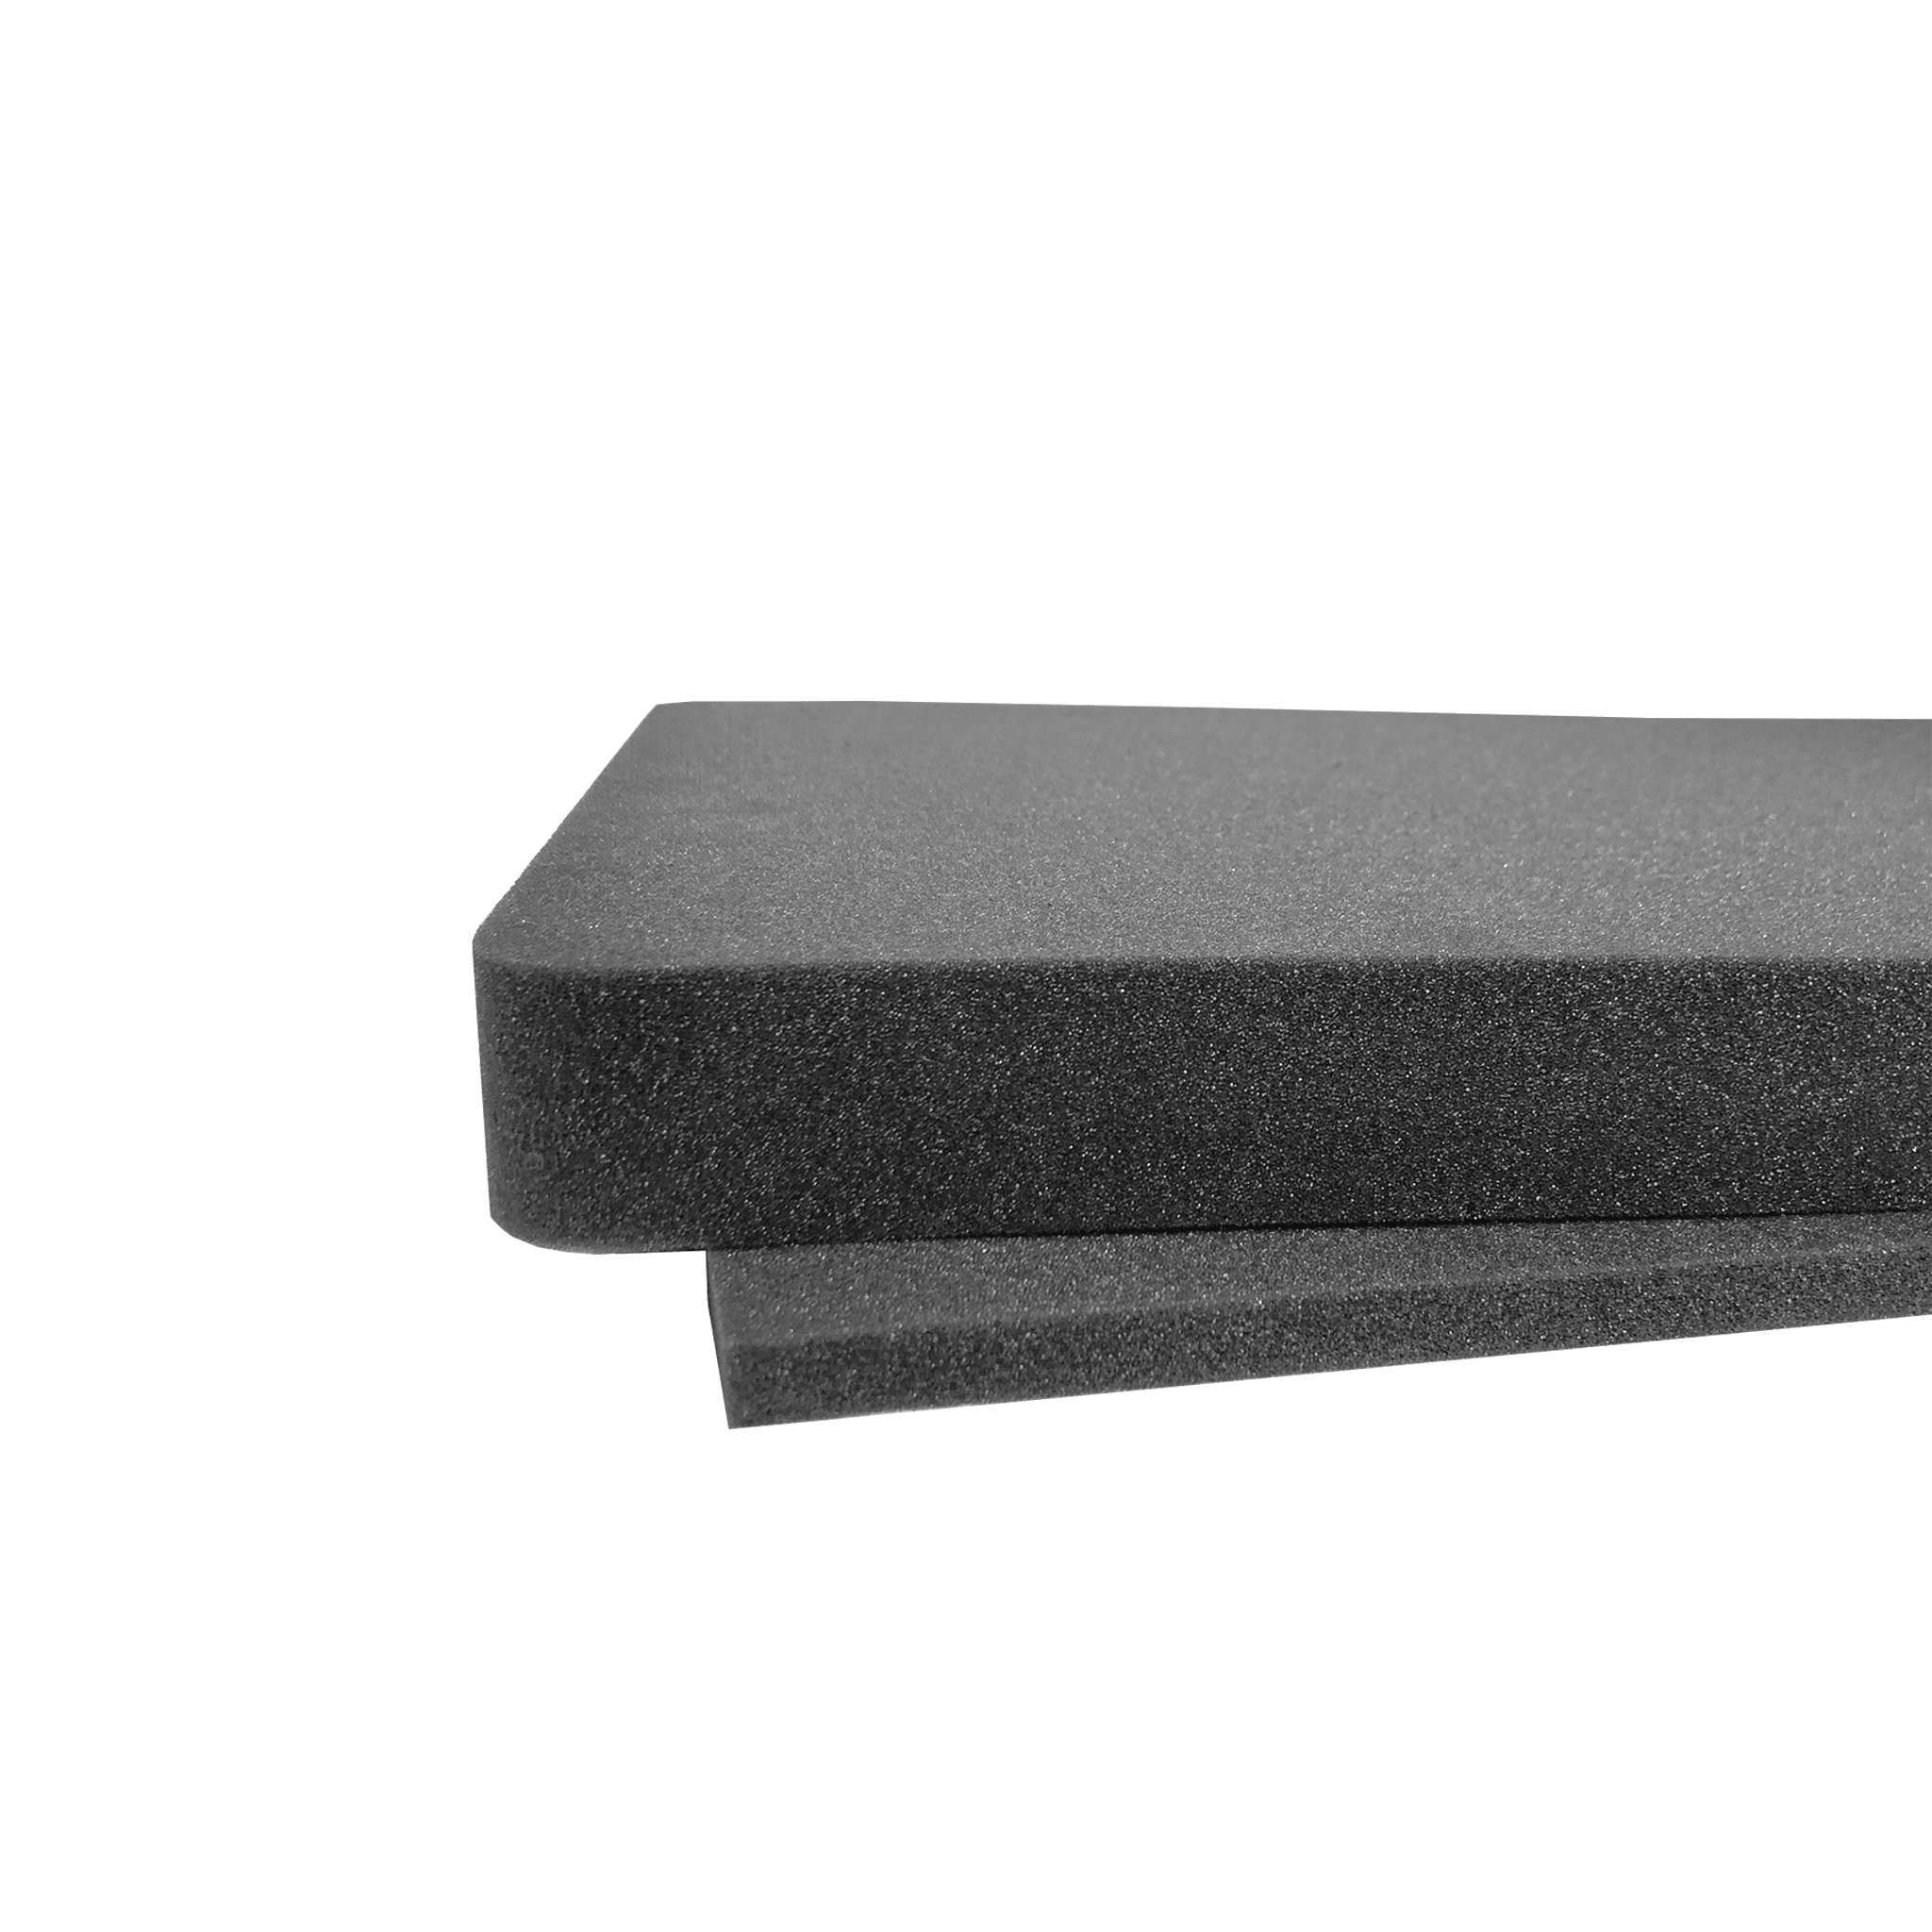 Foama N945 Case for 6 Filters with Foam Insert (Black/Red)